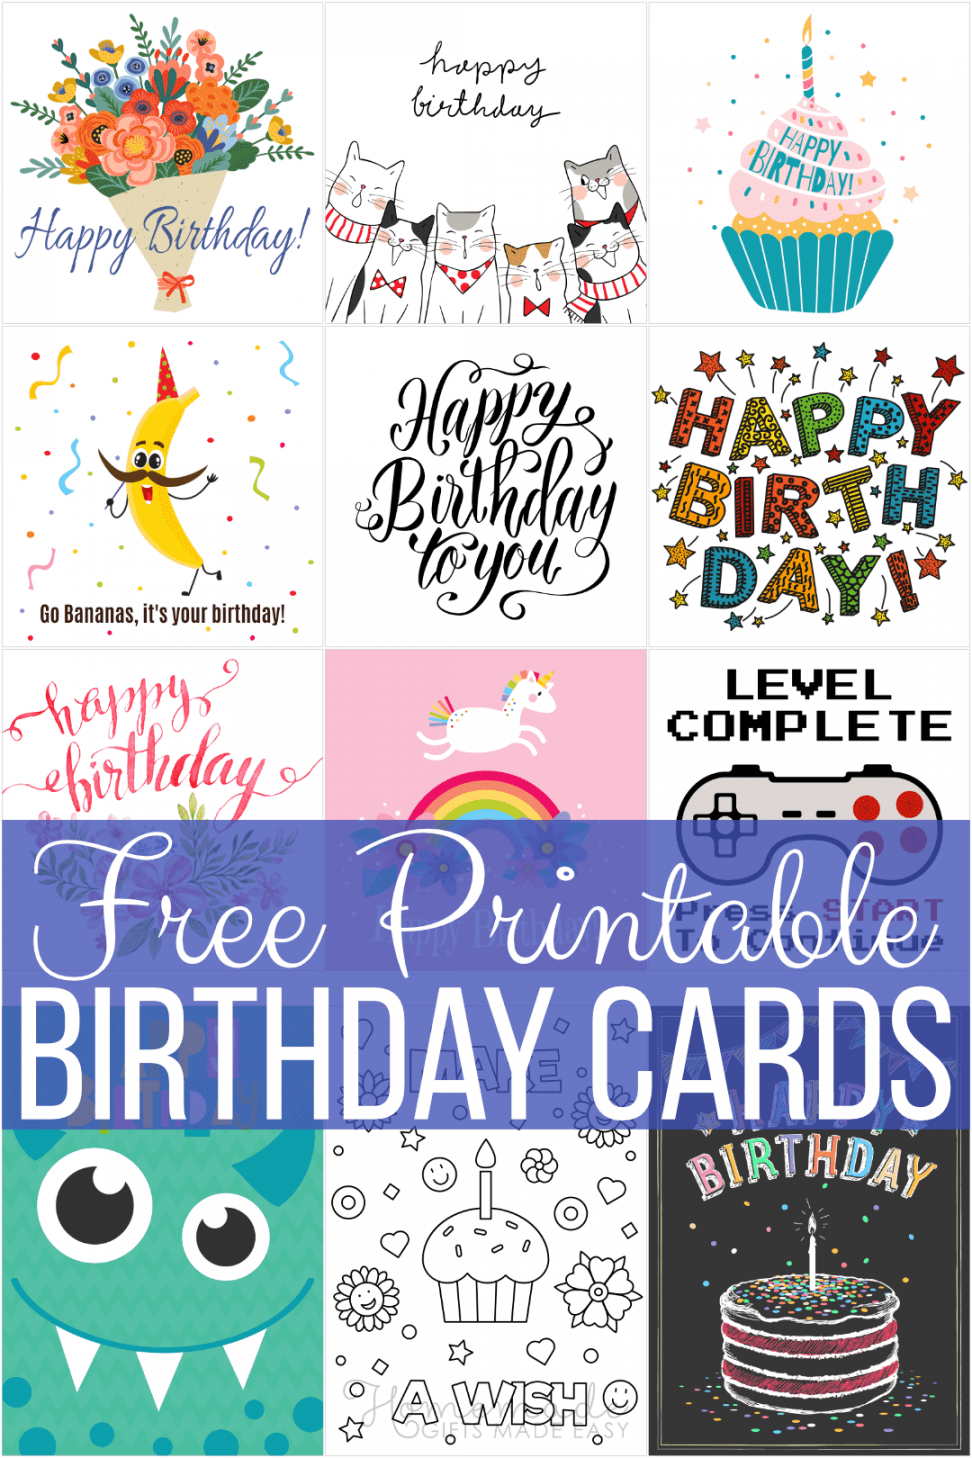 Free Printable Birthday Card - Printable - Free Printable Birthday Cards for Everyone